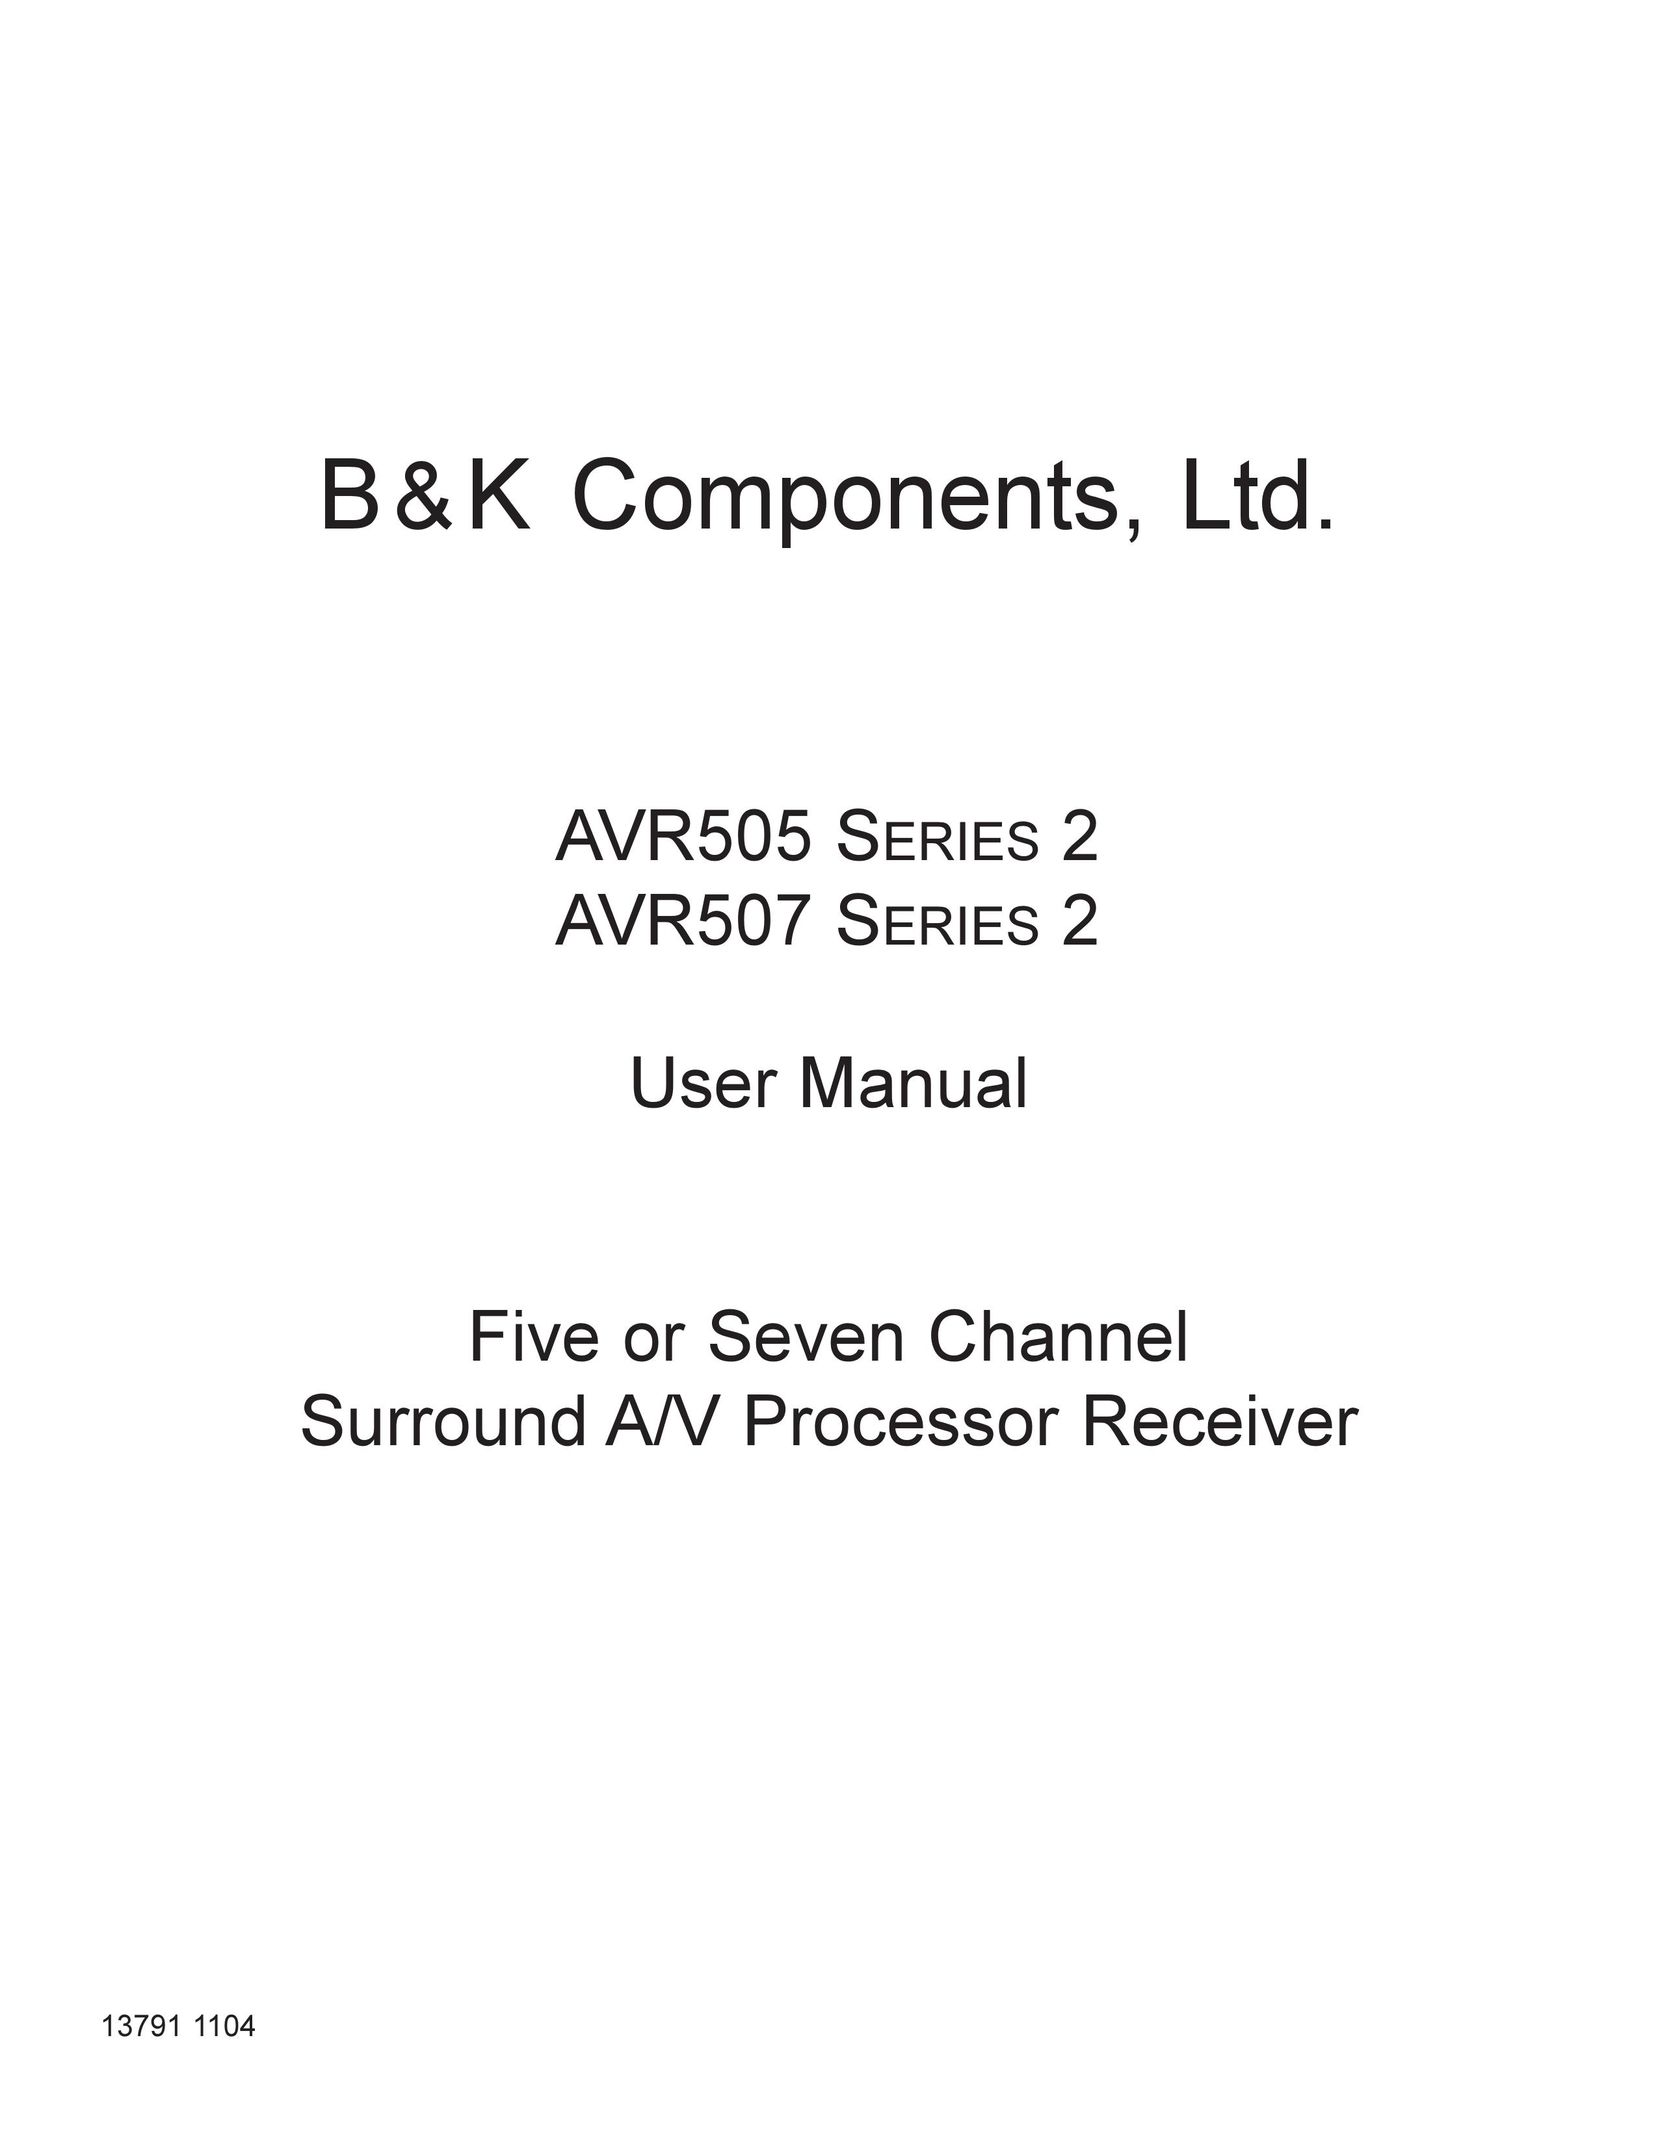 B&K AVR505 SERIES 2 Stereo Receiver User Manual